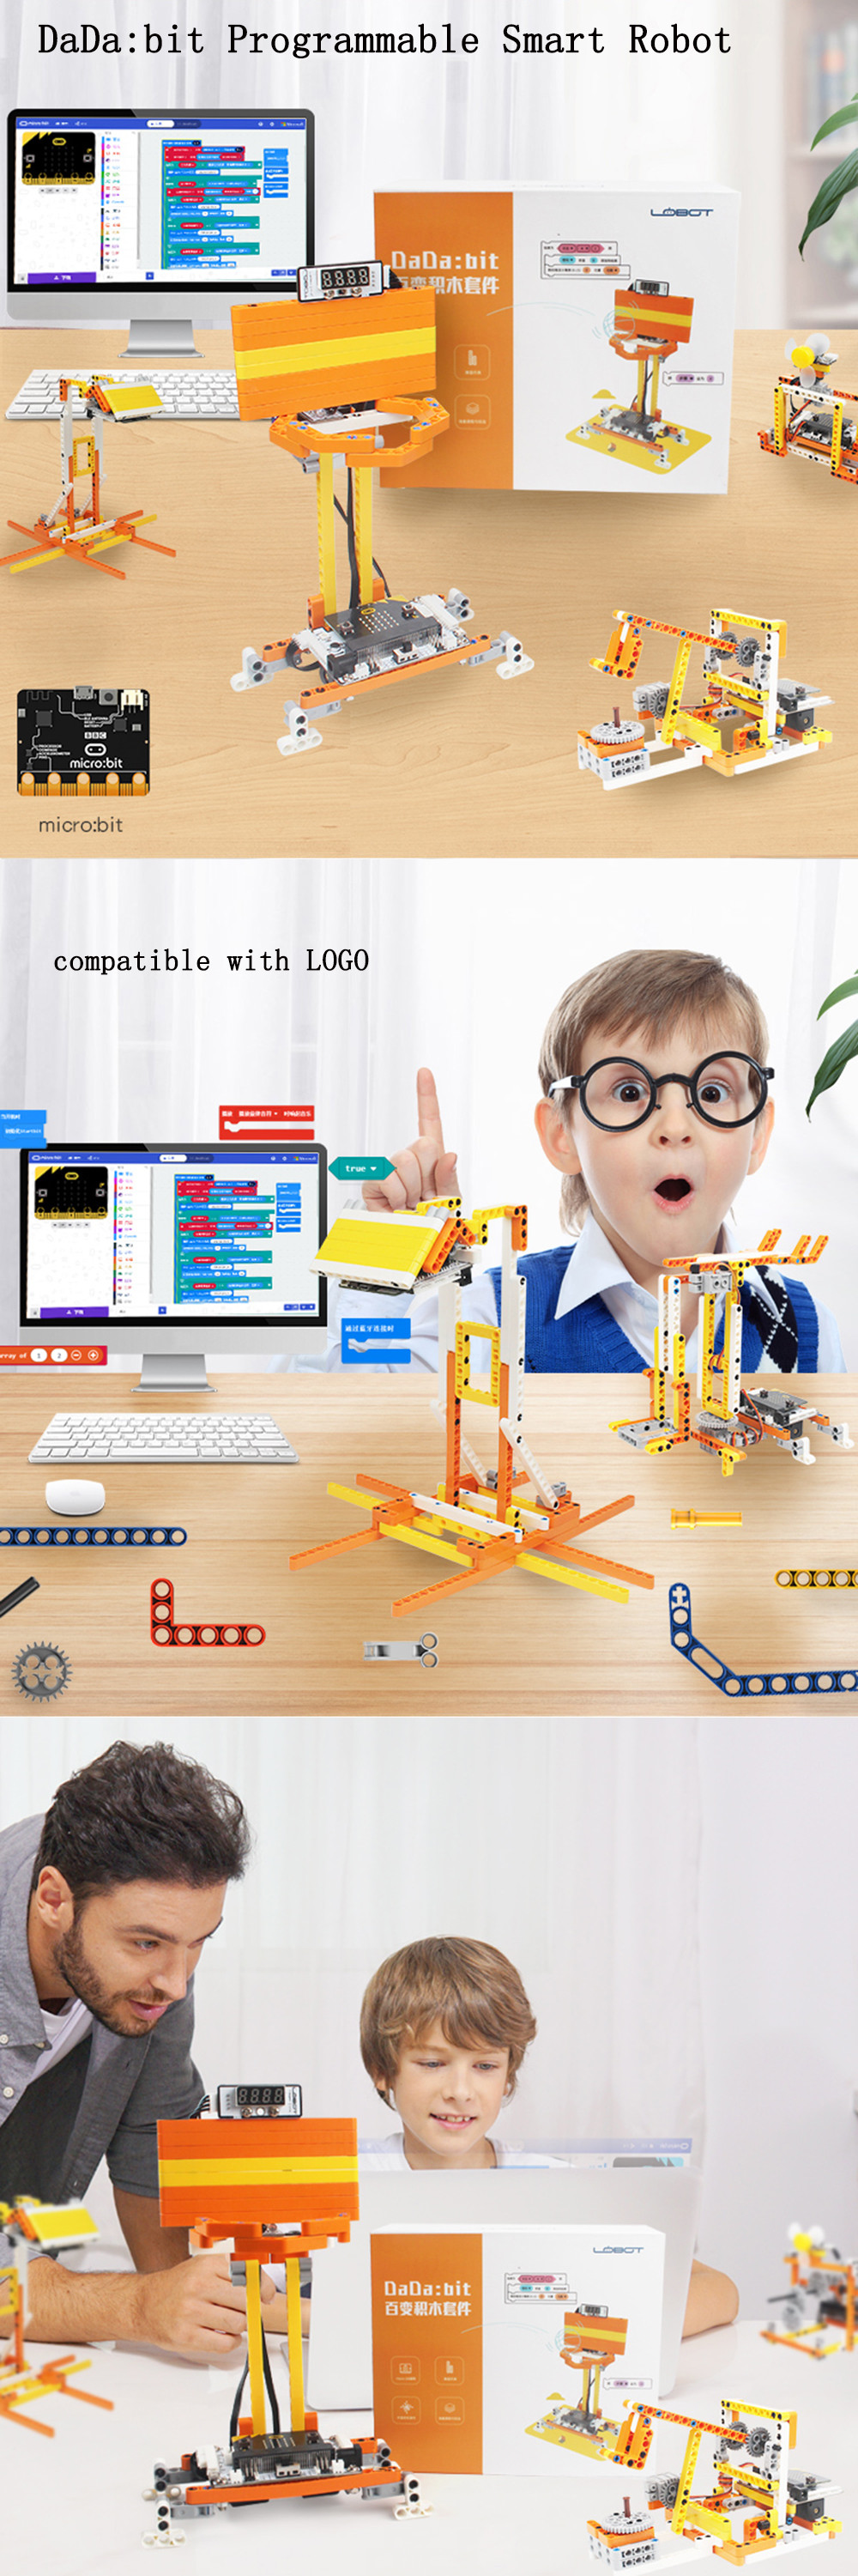 LOBOT-DaDabit-STEAM-DIY-Multifunctional-Programmable-RC-Robot-Educational-Kit-Compatible-Microbit-Py-1527726-7